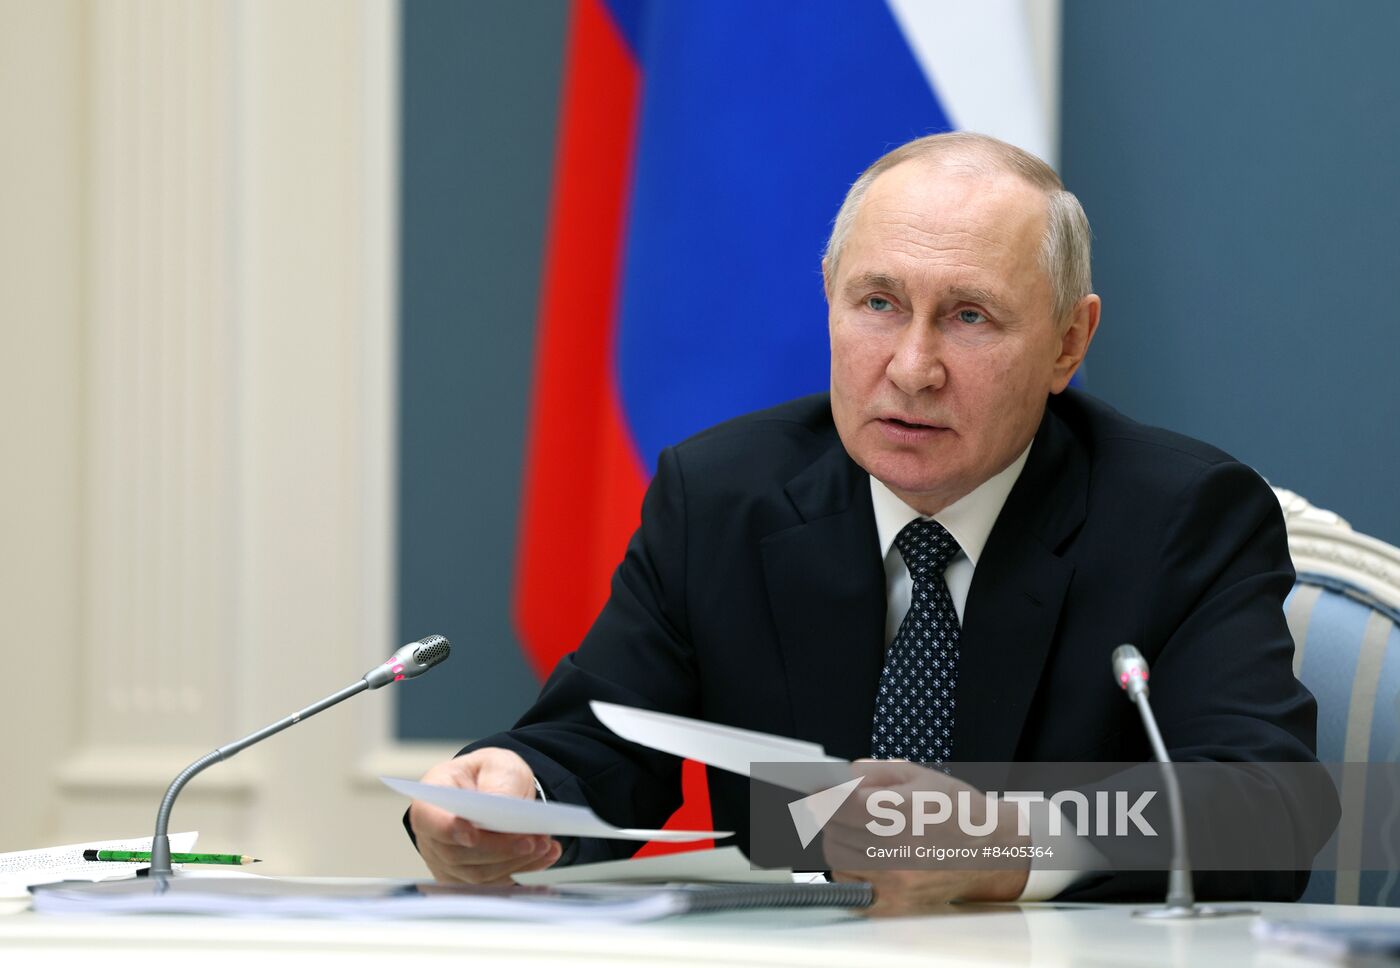 Russia Putin Security Council